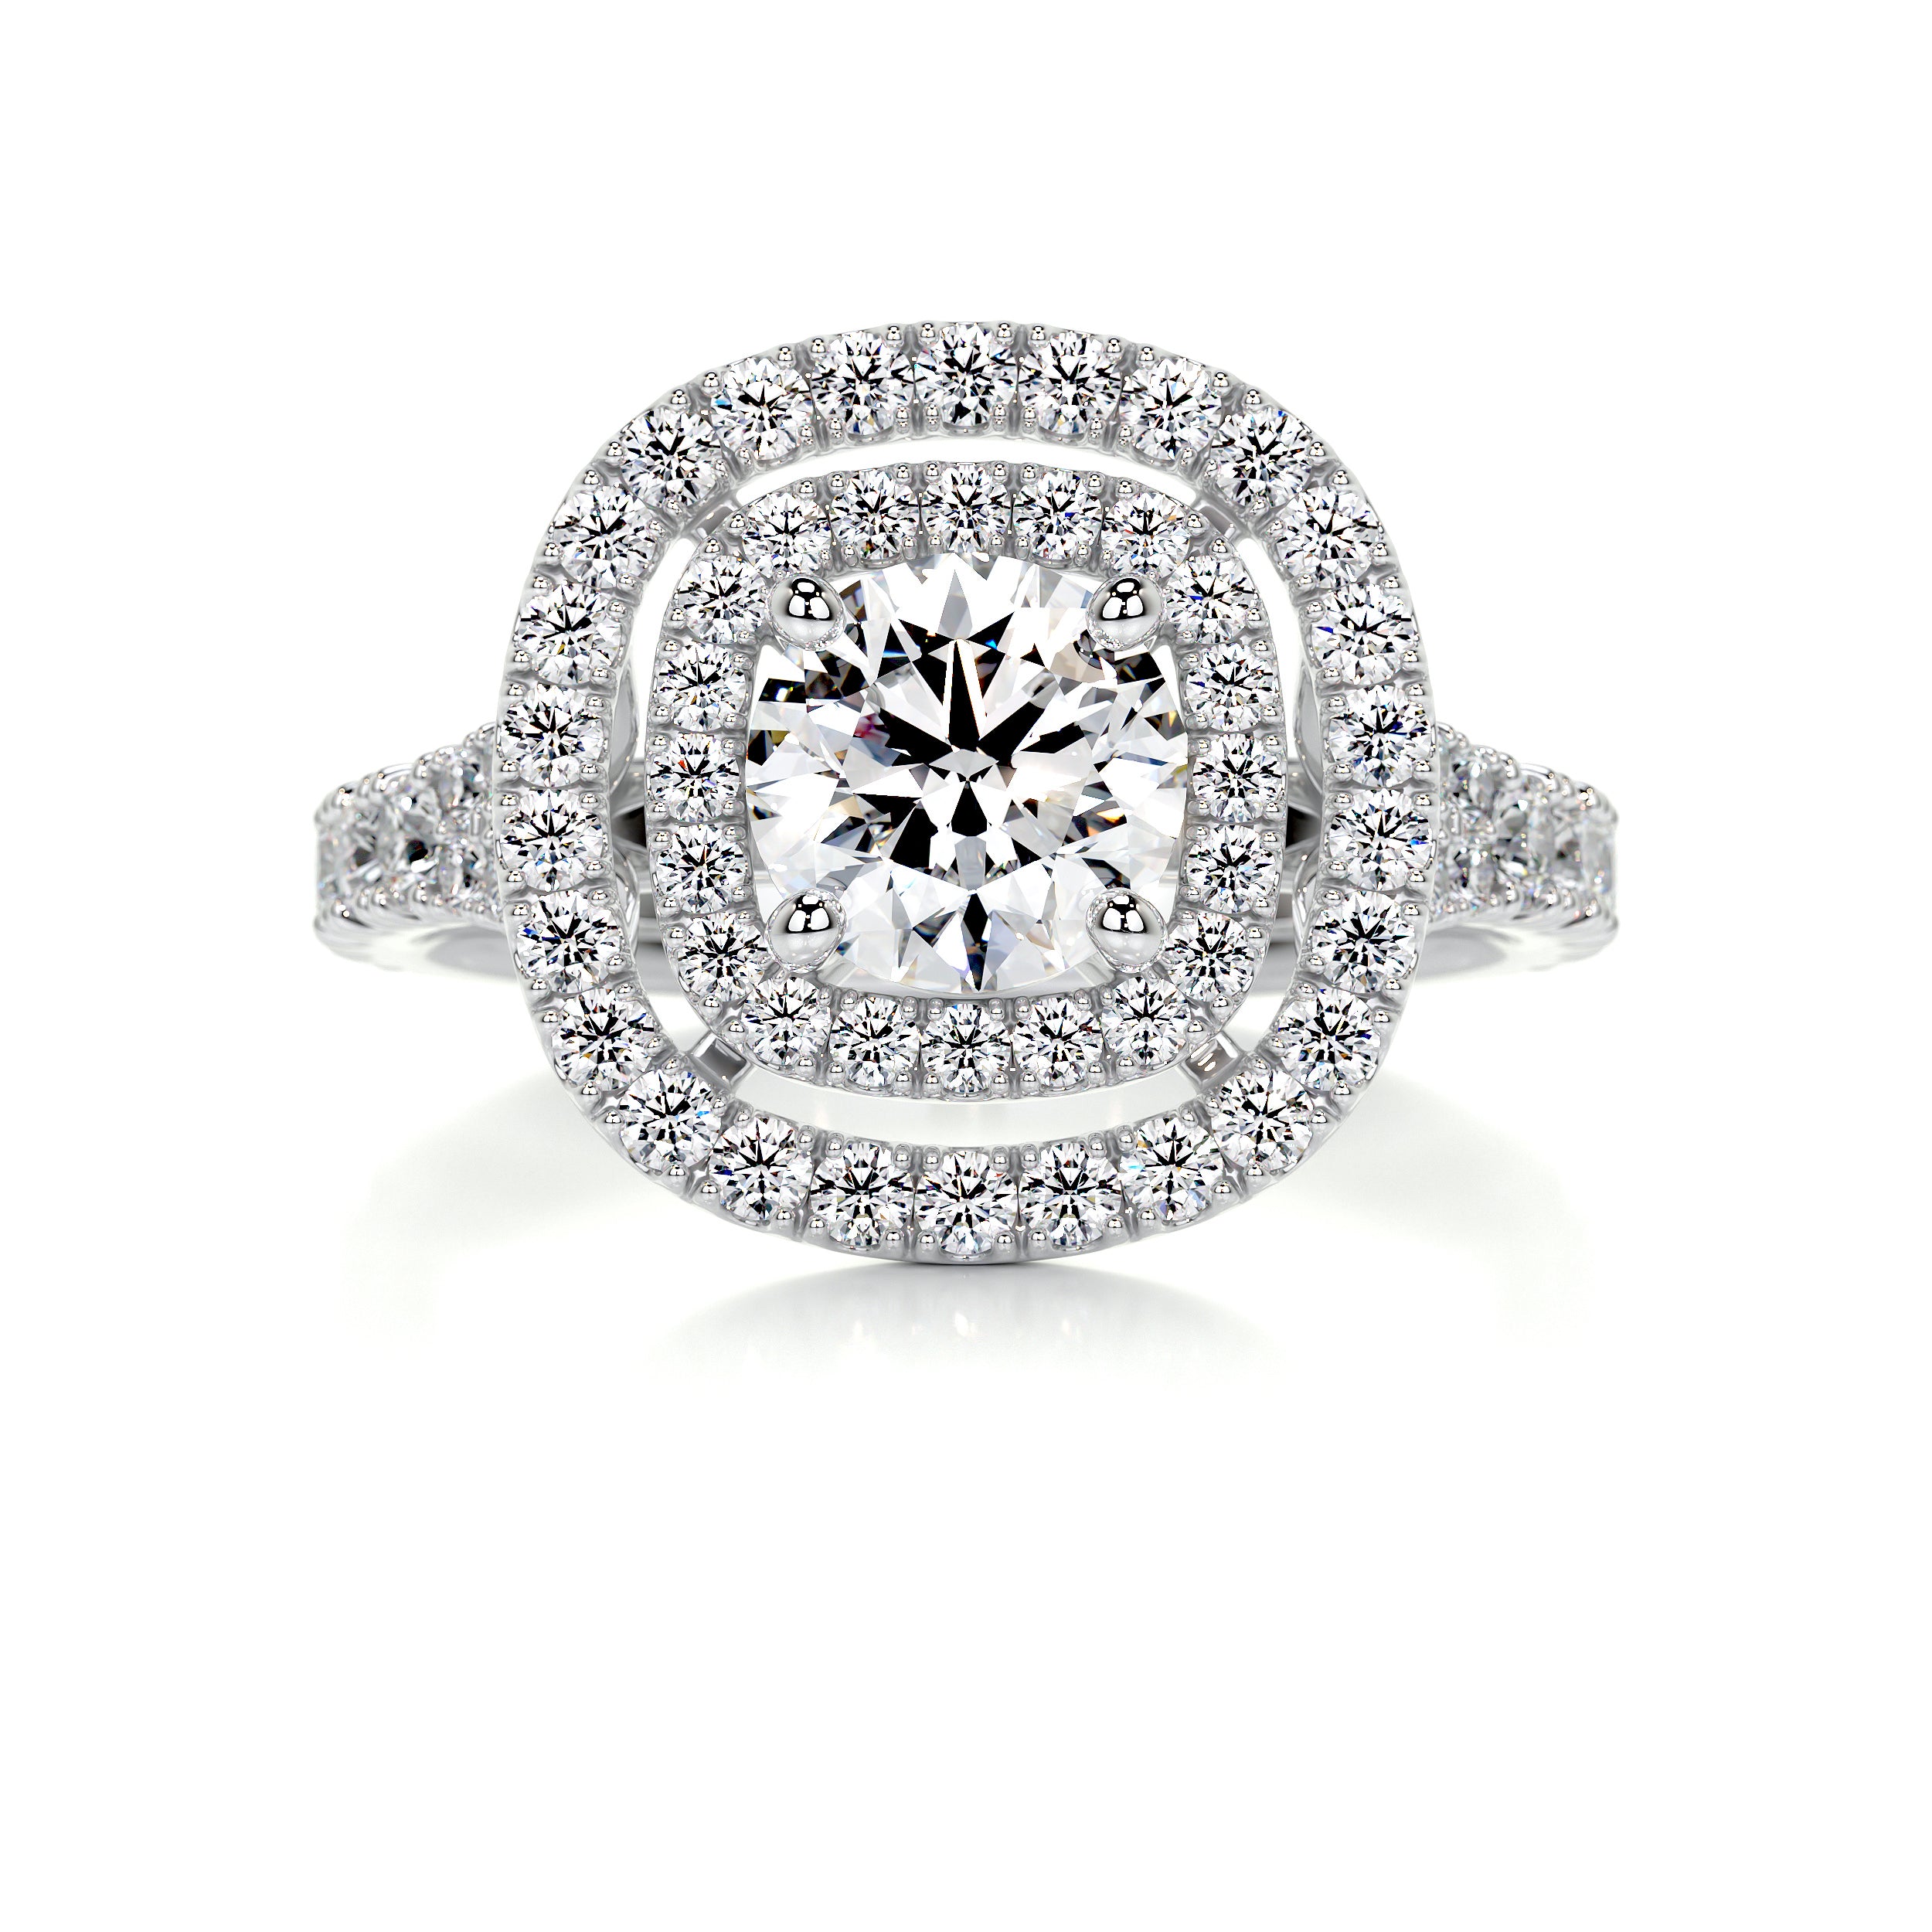 Natalie Diamond Engagement Ring   (2.2 Carat) -18K White Gold